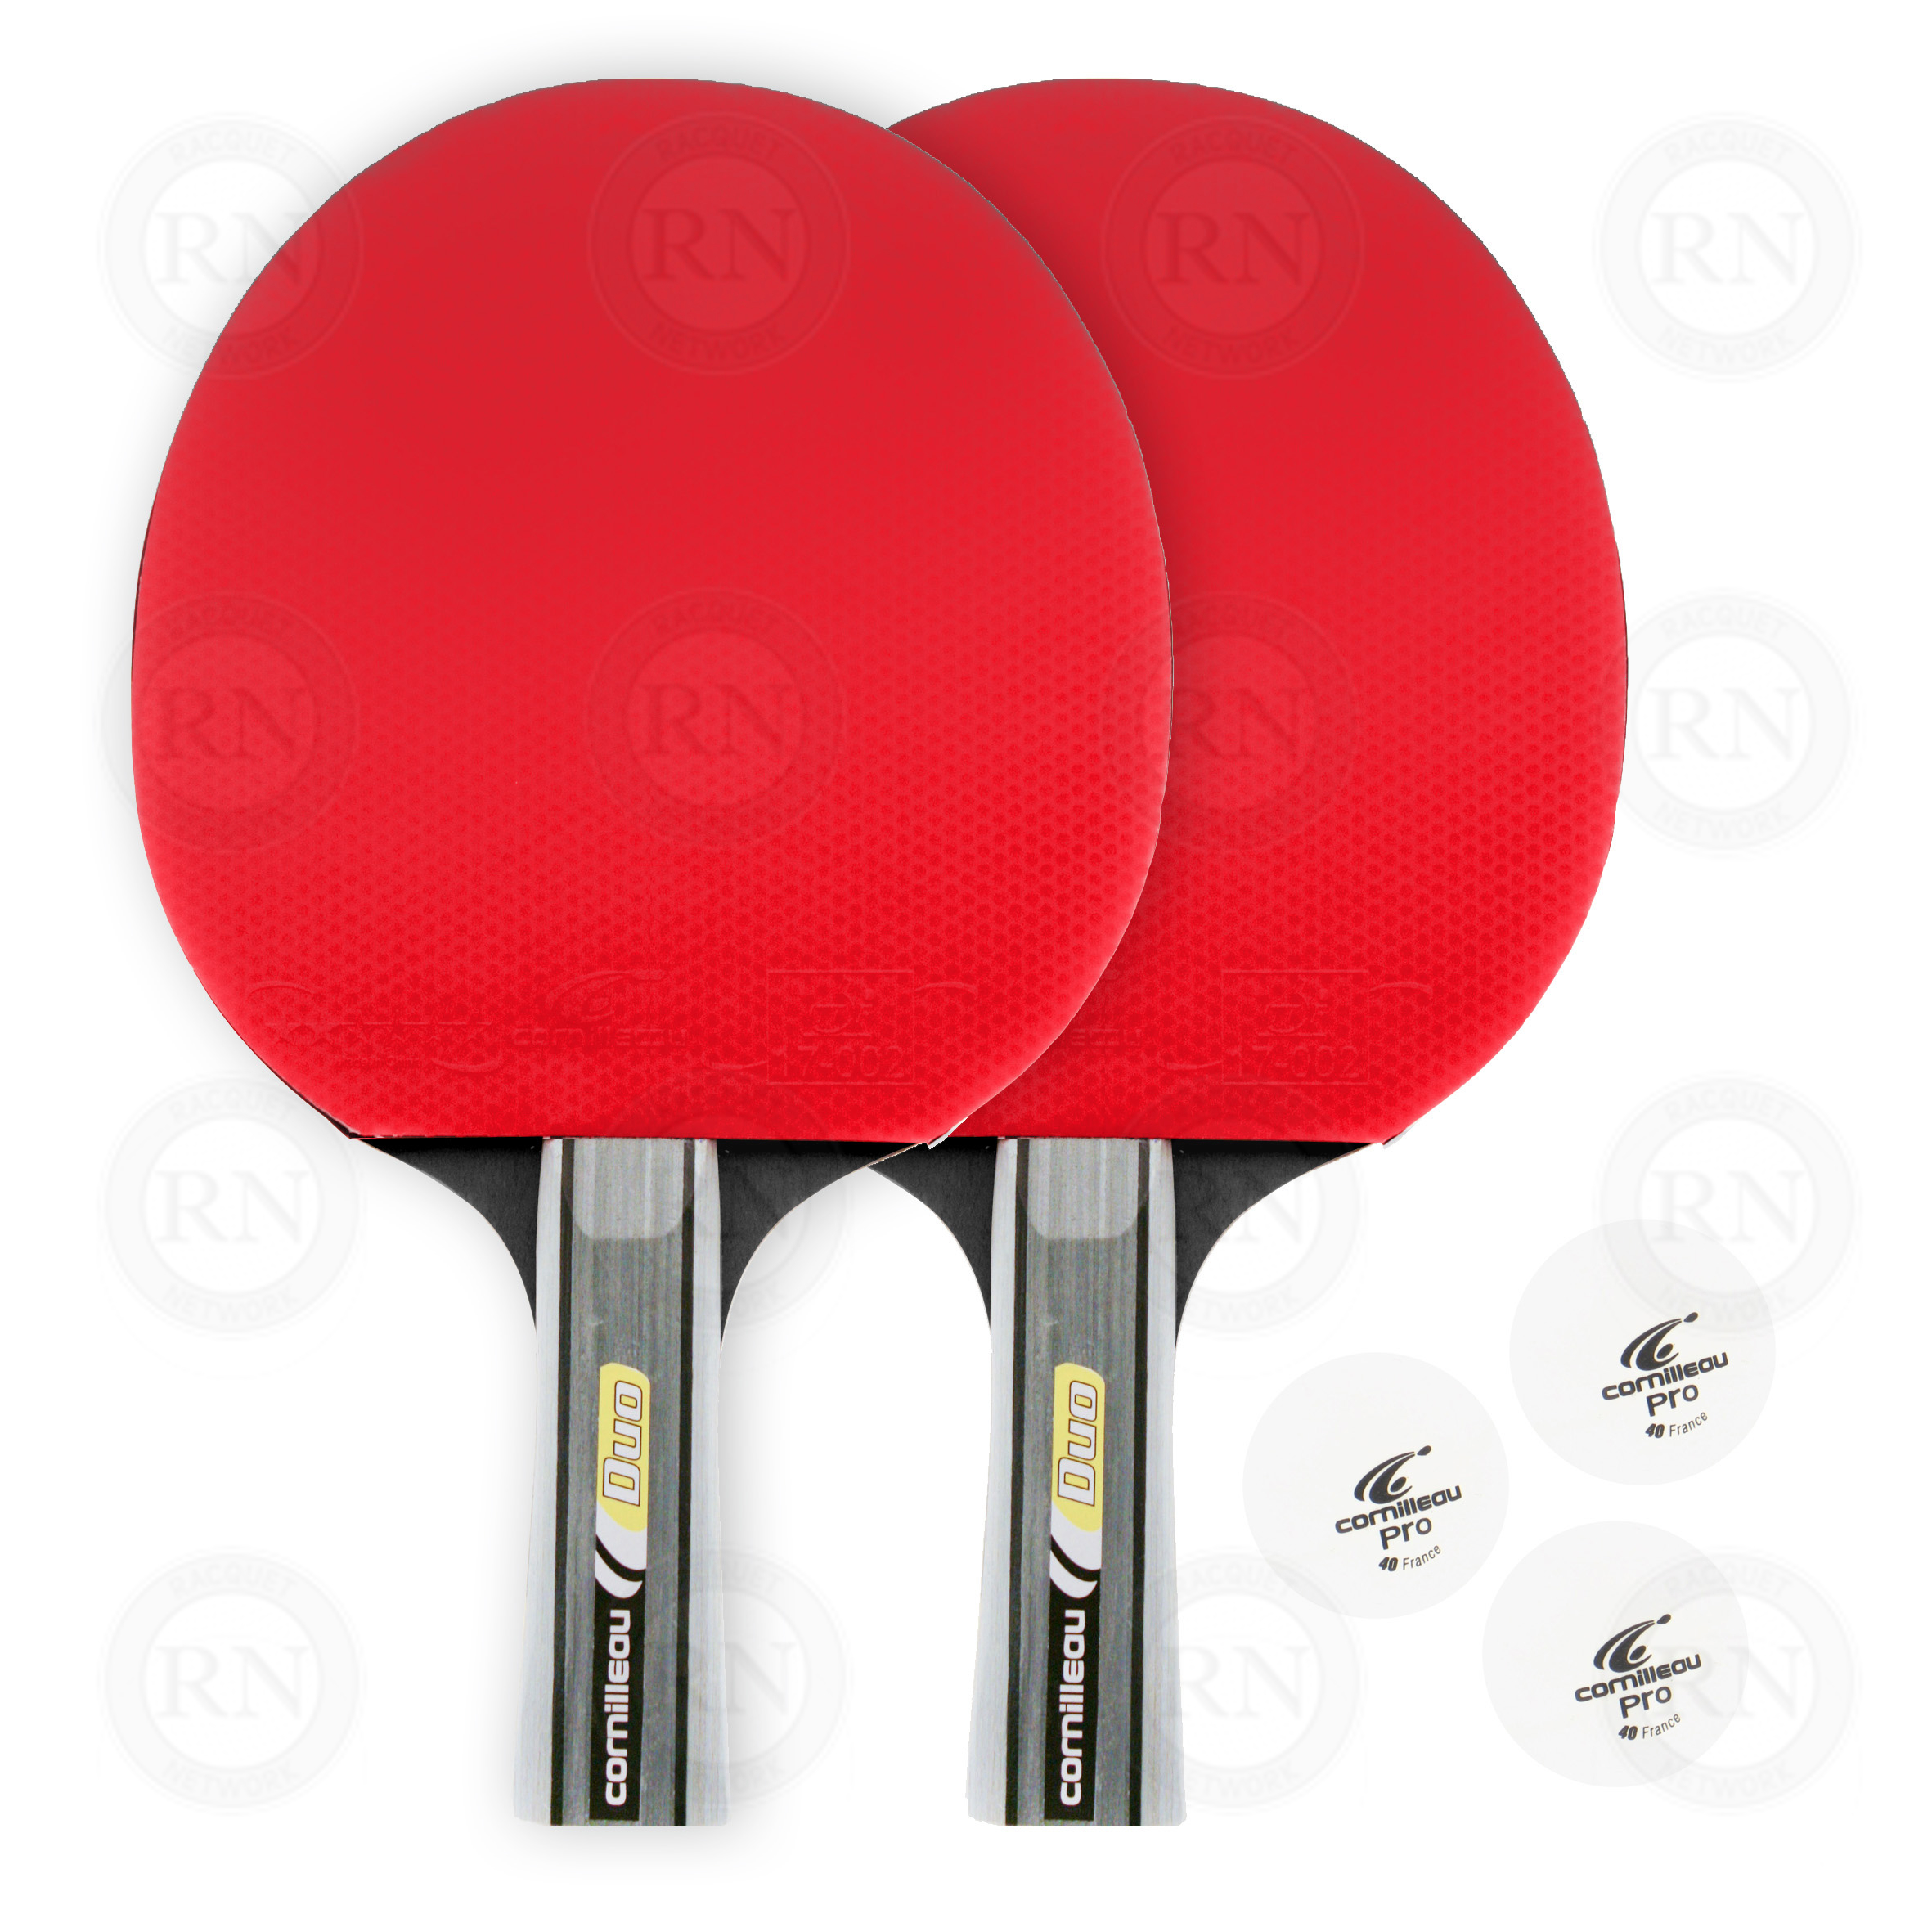 table tennis kit